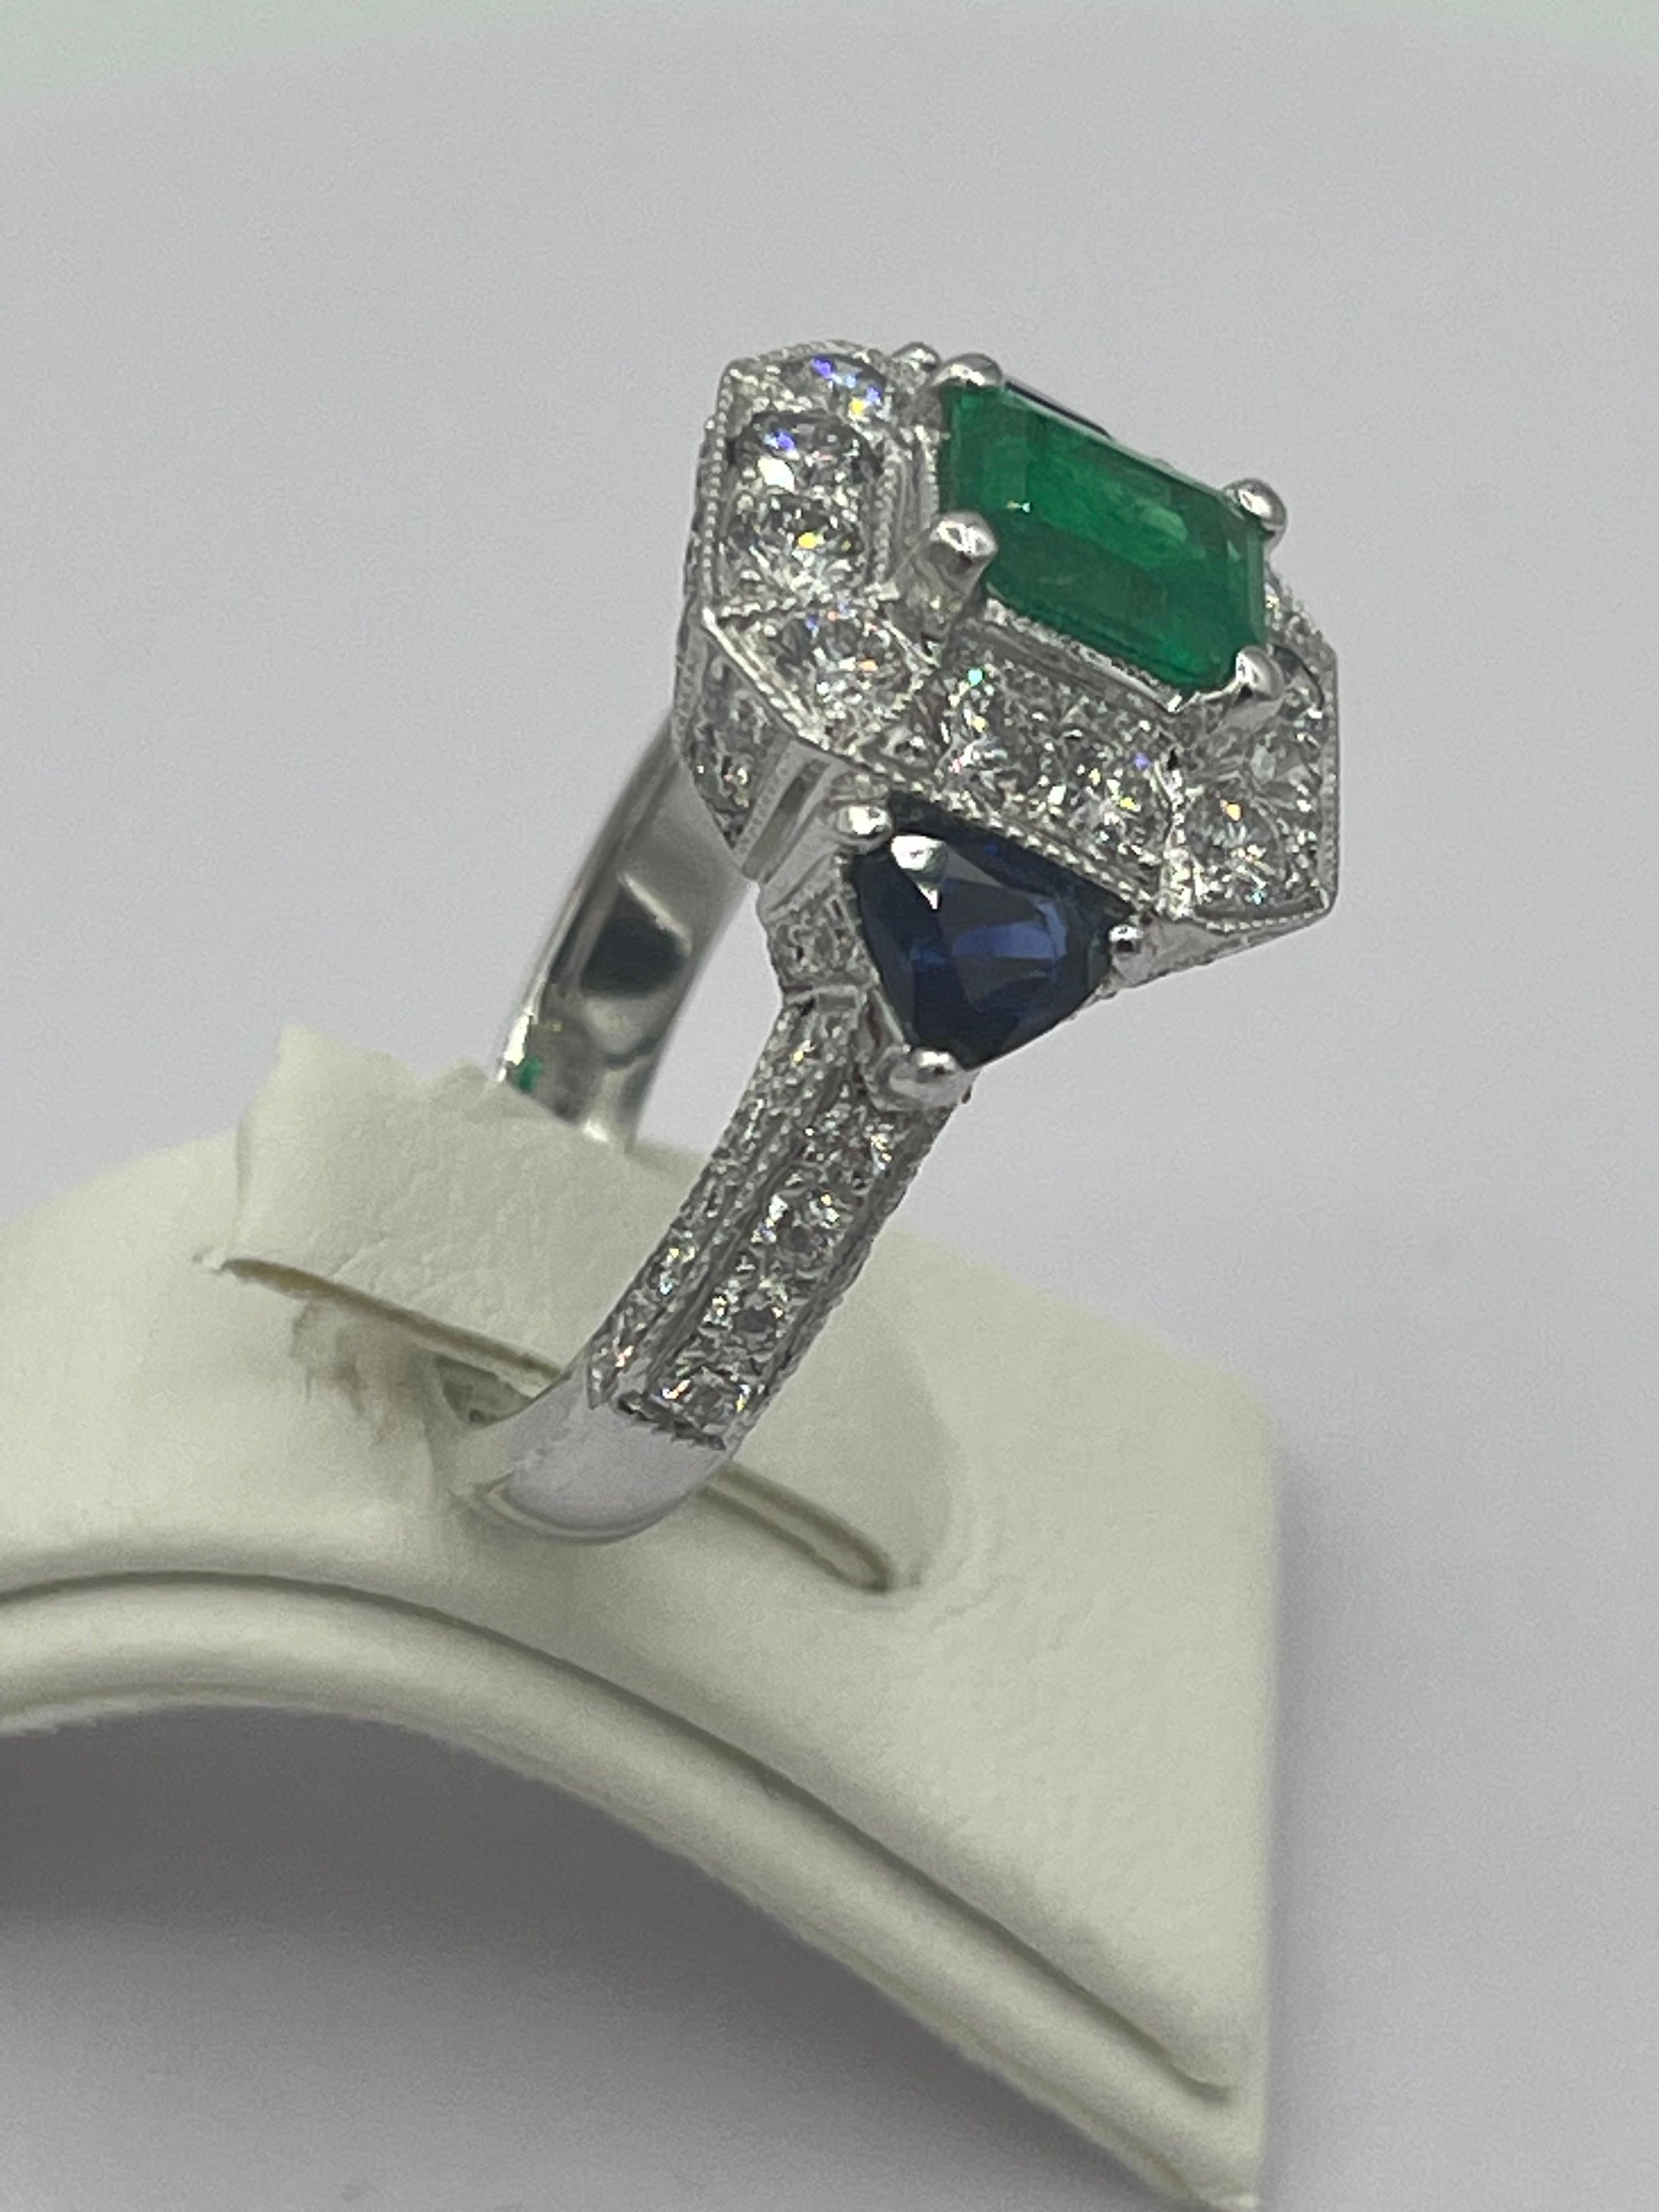 Platinum hallmarked PL 950
0,91 ct emerald colombia
1,02 ct sapphire
1,54 ct diamond
size 55,5
weight 11 gram